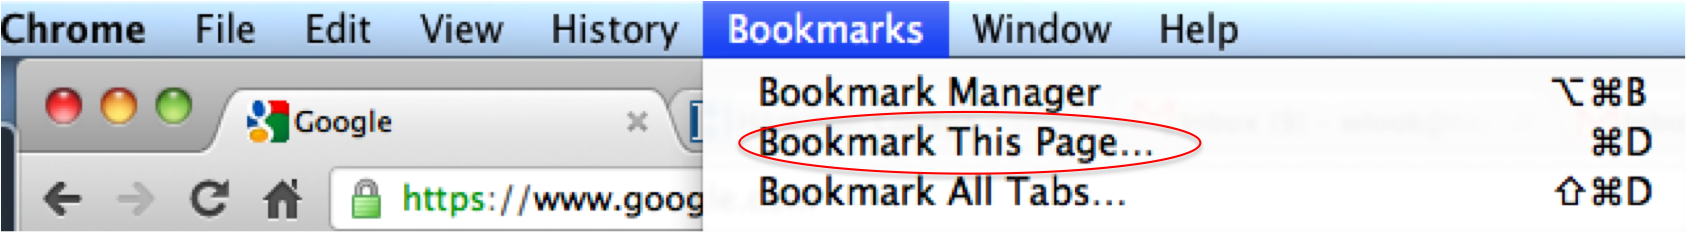 adding Mac bookmarks in Chrome